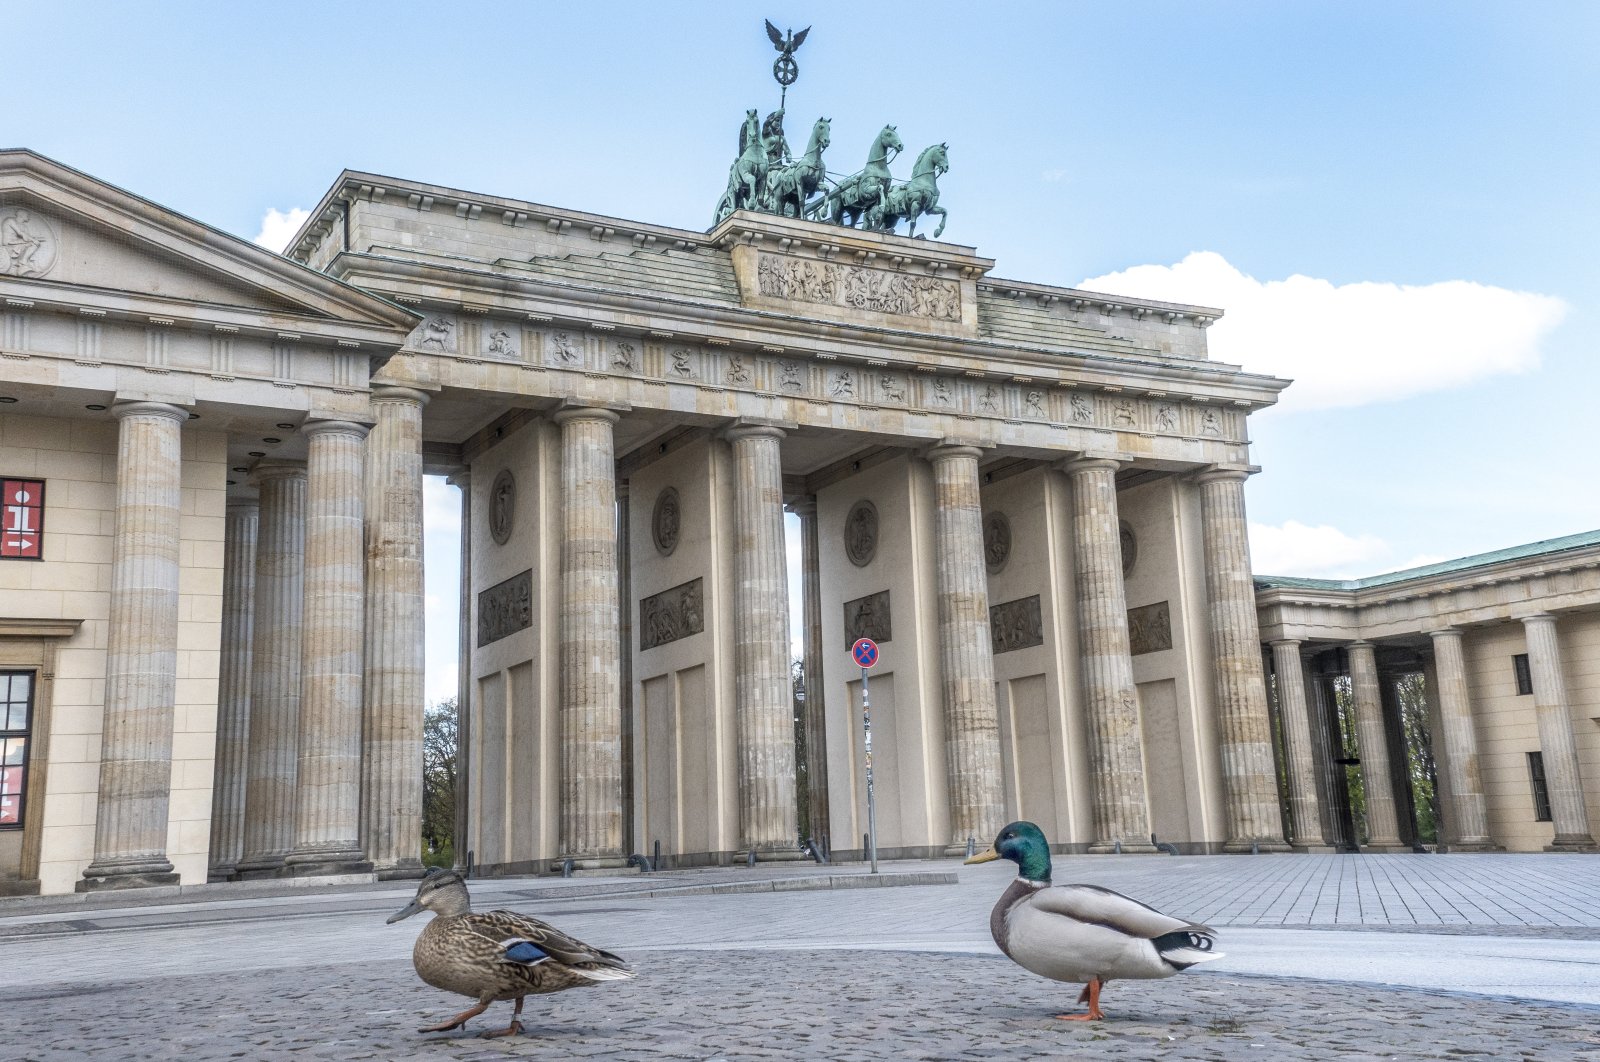 A pair of mallard ducks wanders in front of the Brandenburg Gate at Pariser Platz in Berlin, Germany, April 14, 2020. (EPA Photo)